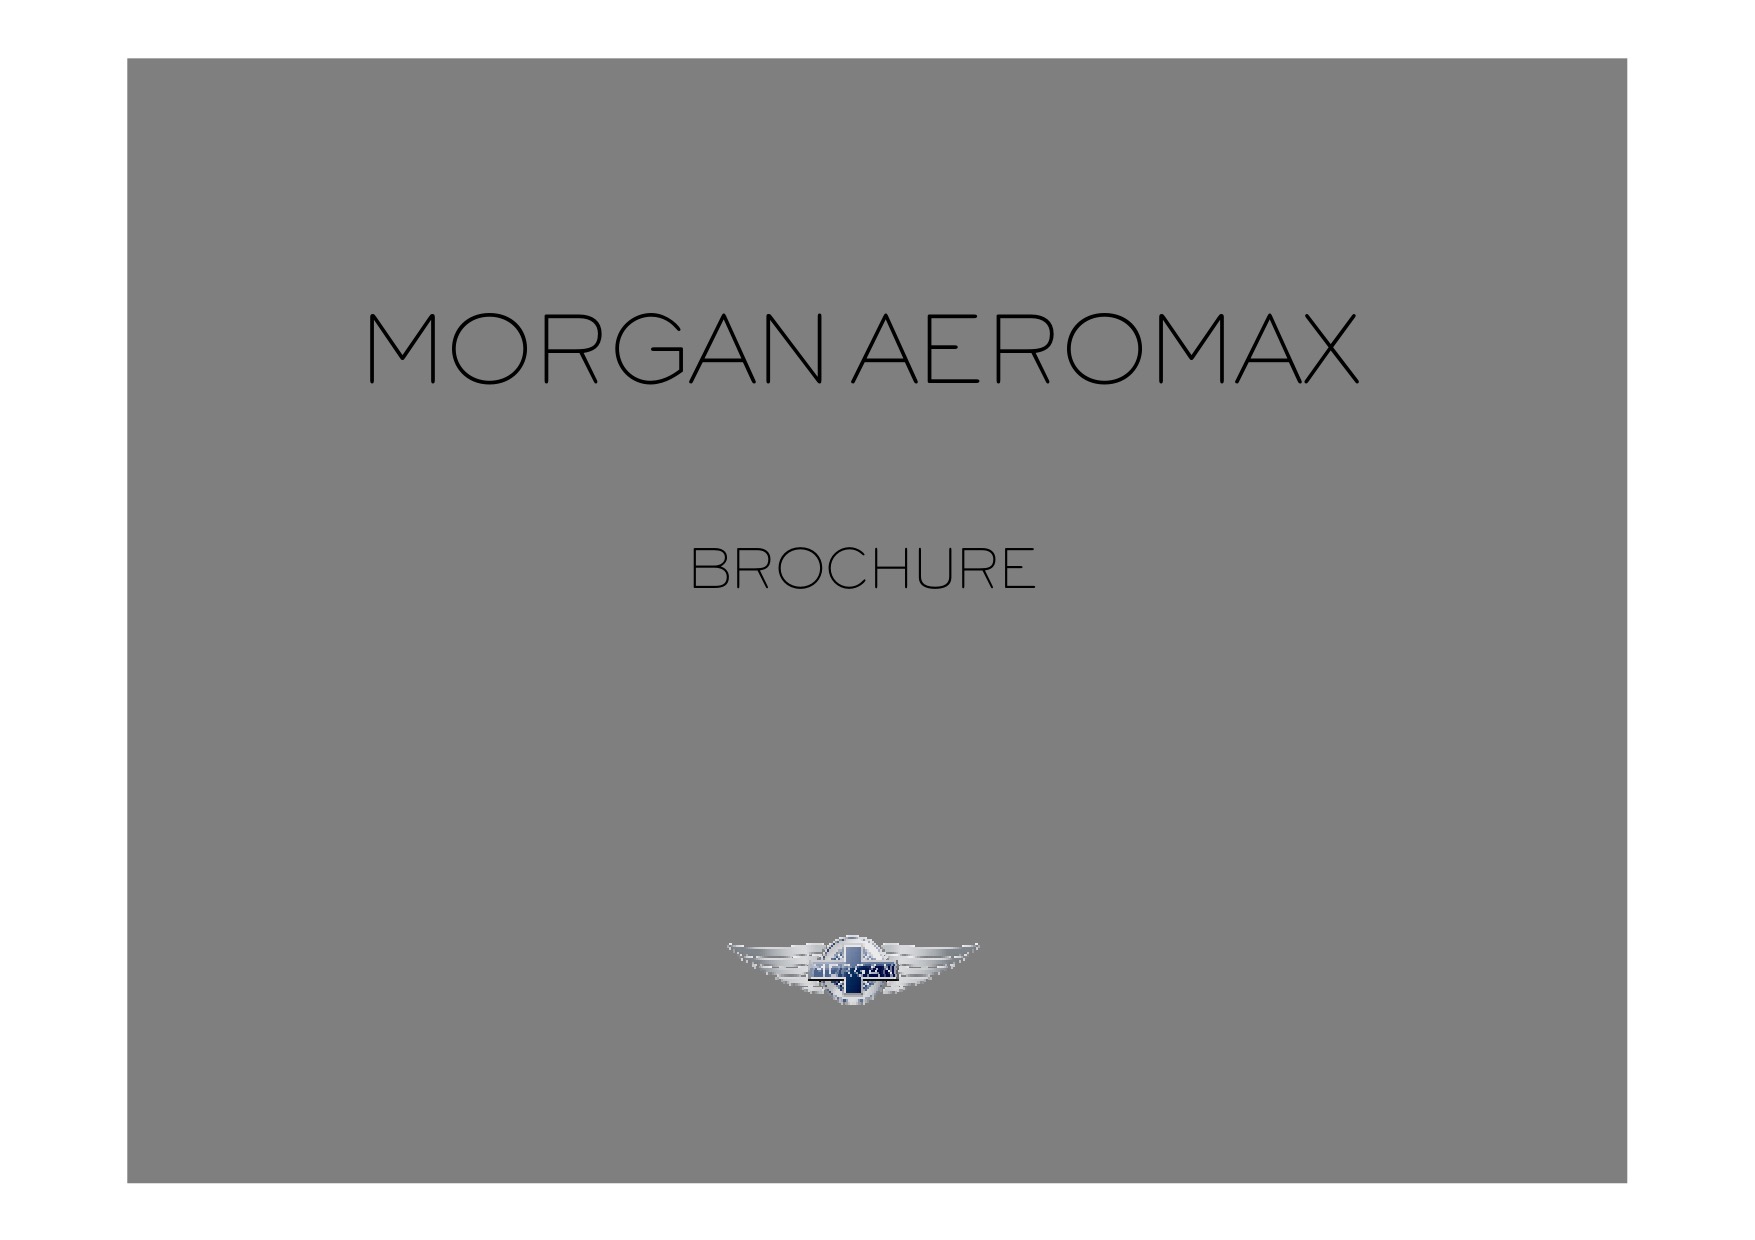 2008 Morgan Aeromax Brochure